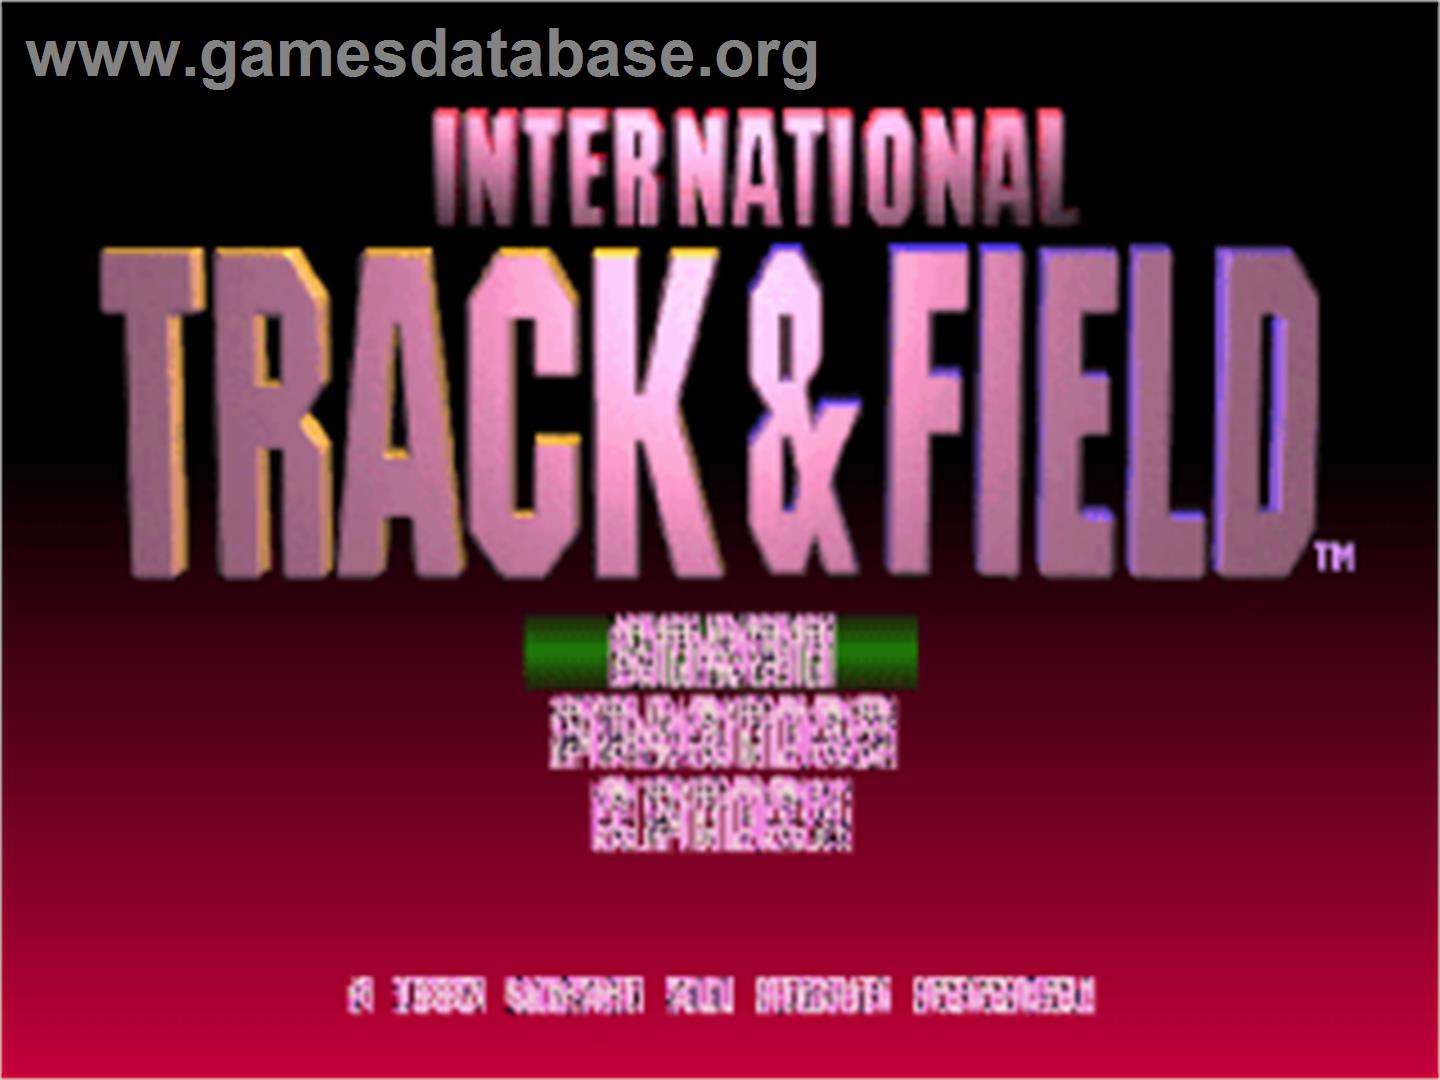 International Track & Field - Sony Playstation - Artwork - Title Screen